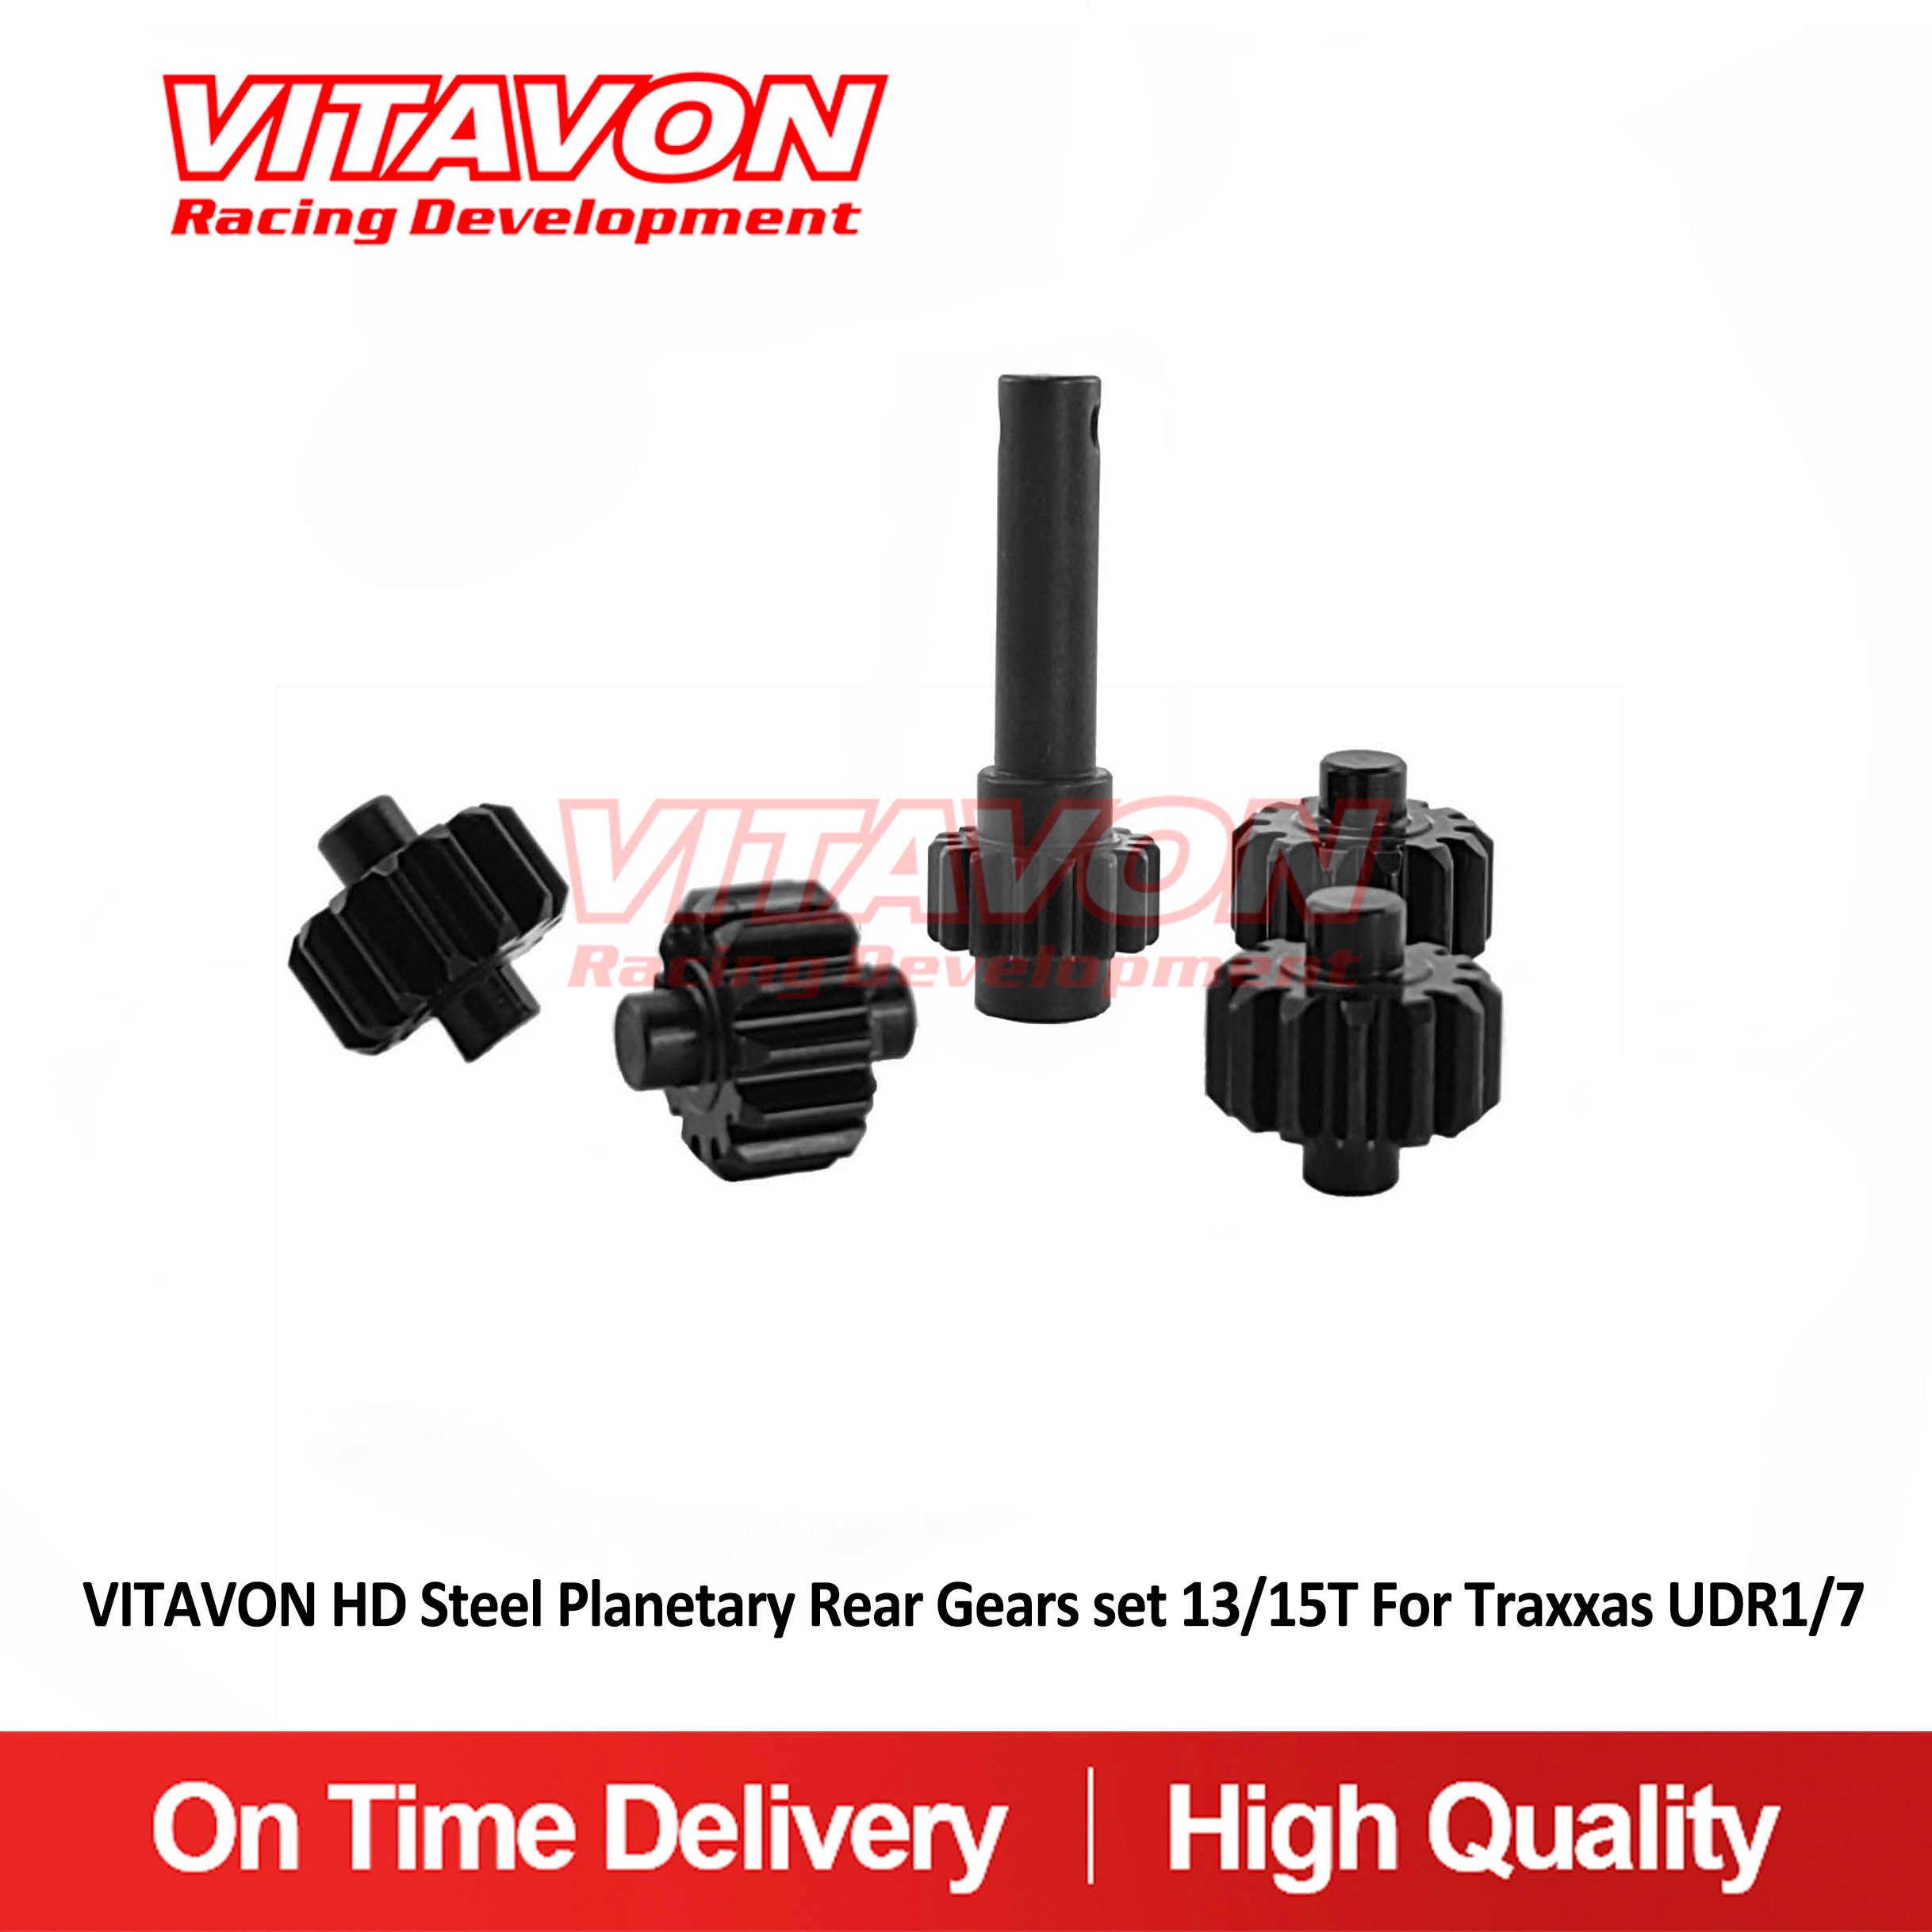 VITAVON HD Steel Planetary Rear Gears set 13/15T For Traxxas UDR1/7